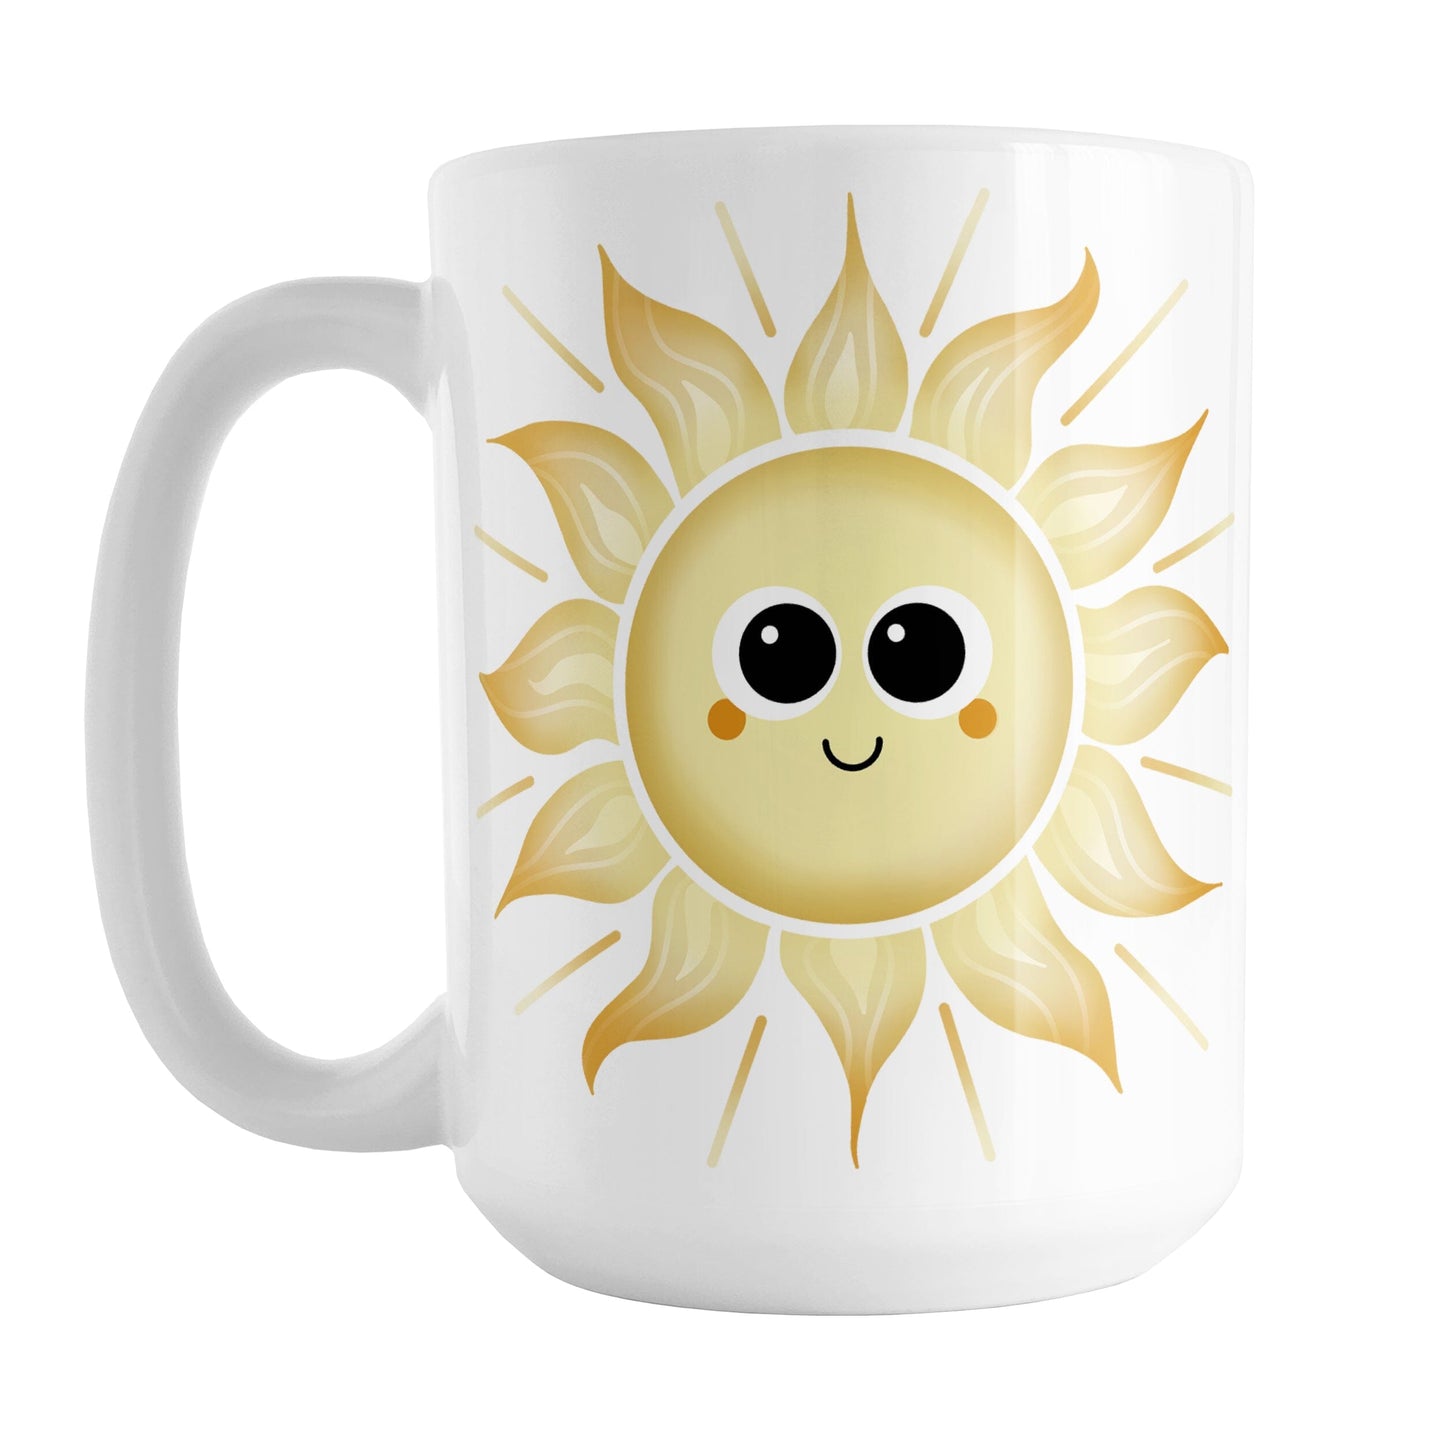 Happy Sun Mug (15oz) at Amy's Coffee Mugs. A ceramic coffee mug designed with a cute and happy yellow smiling sun on both sides of the mug. 